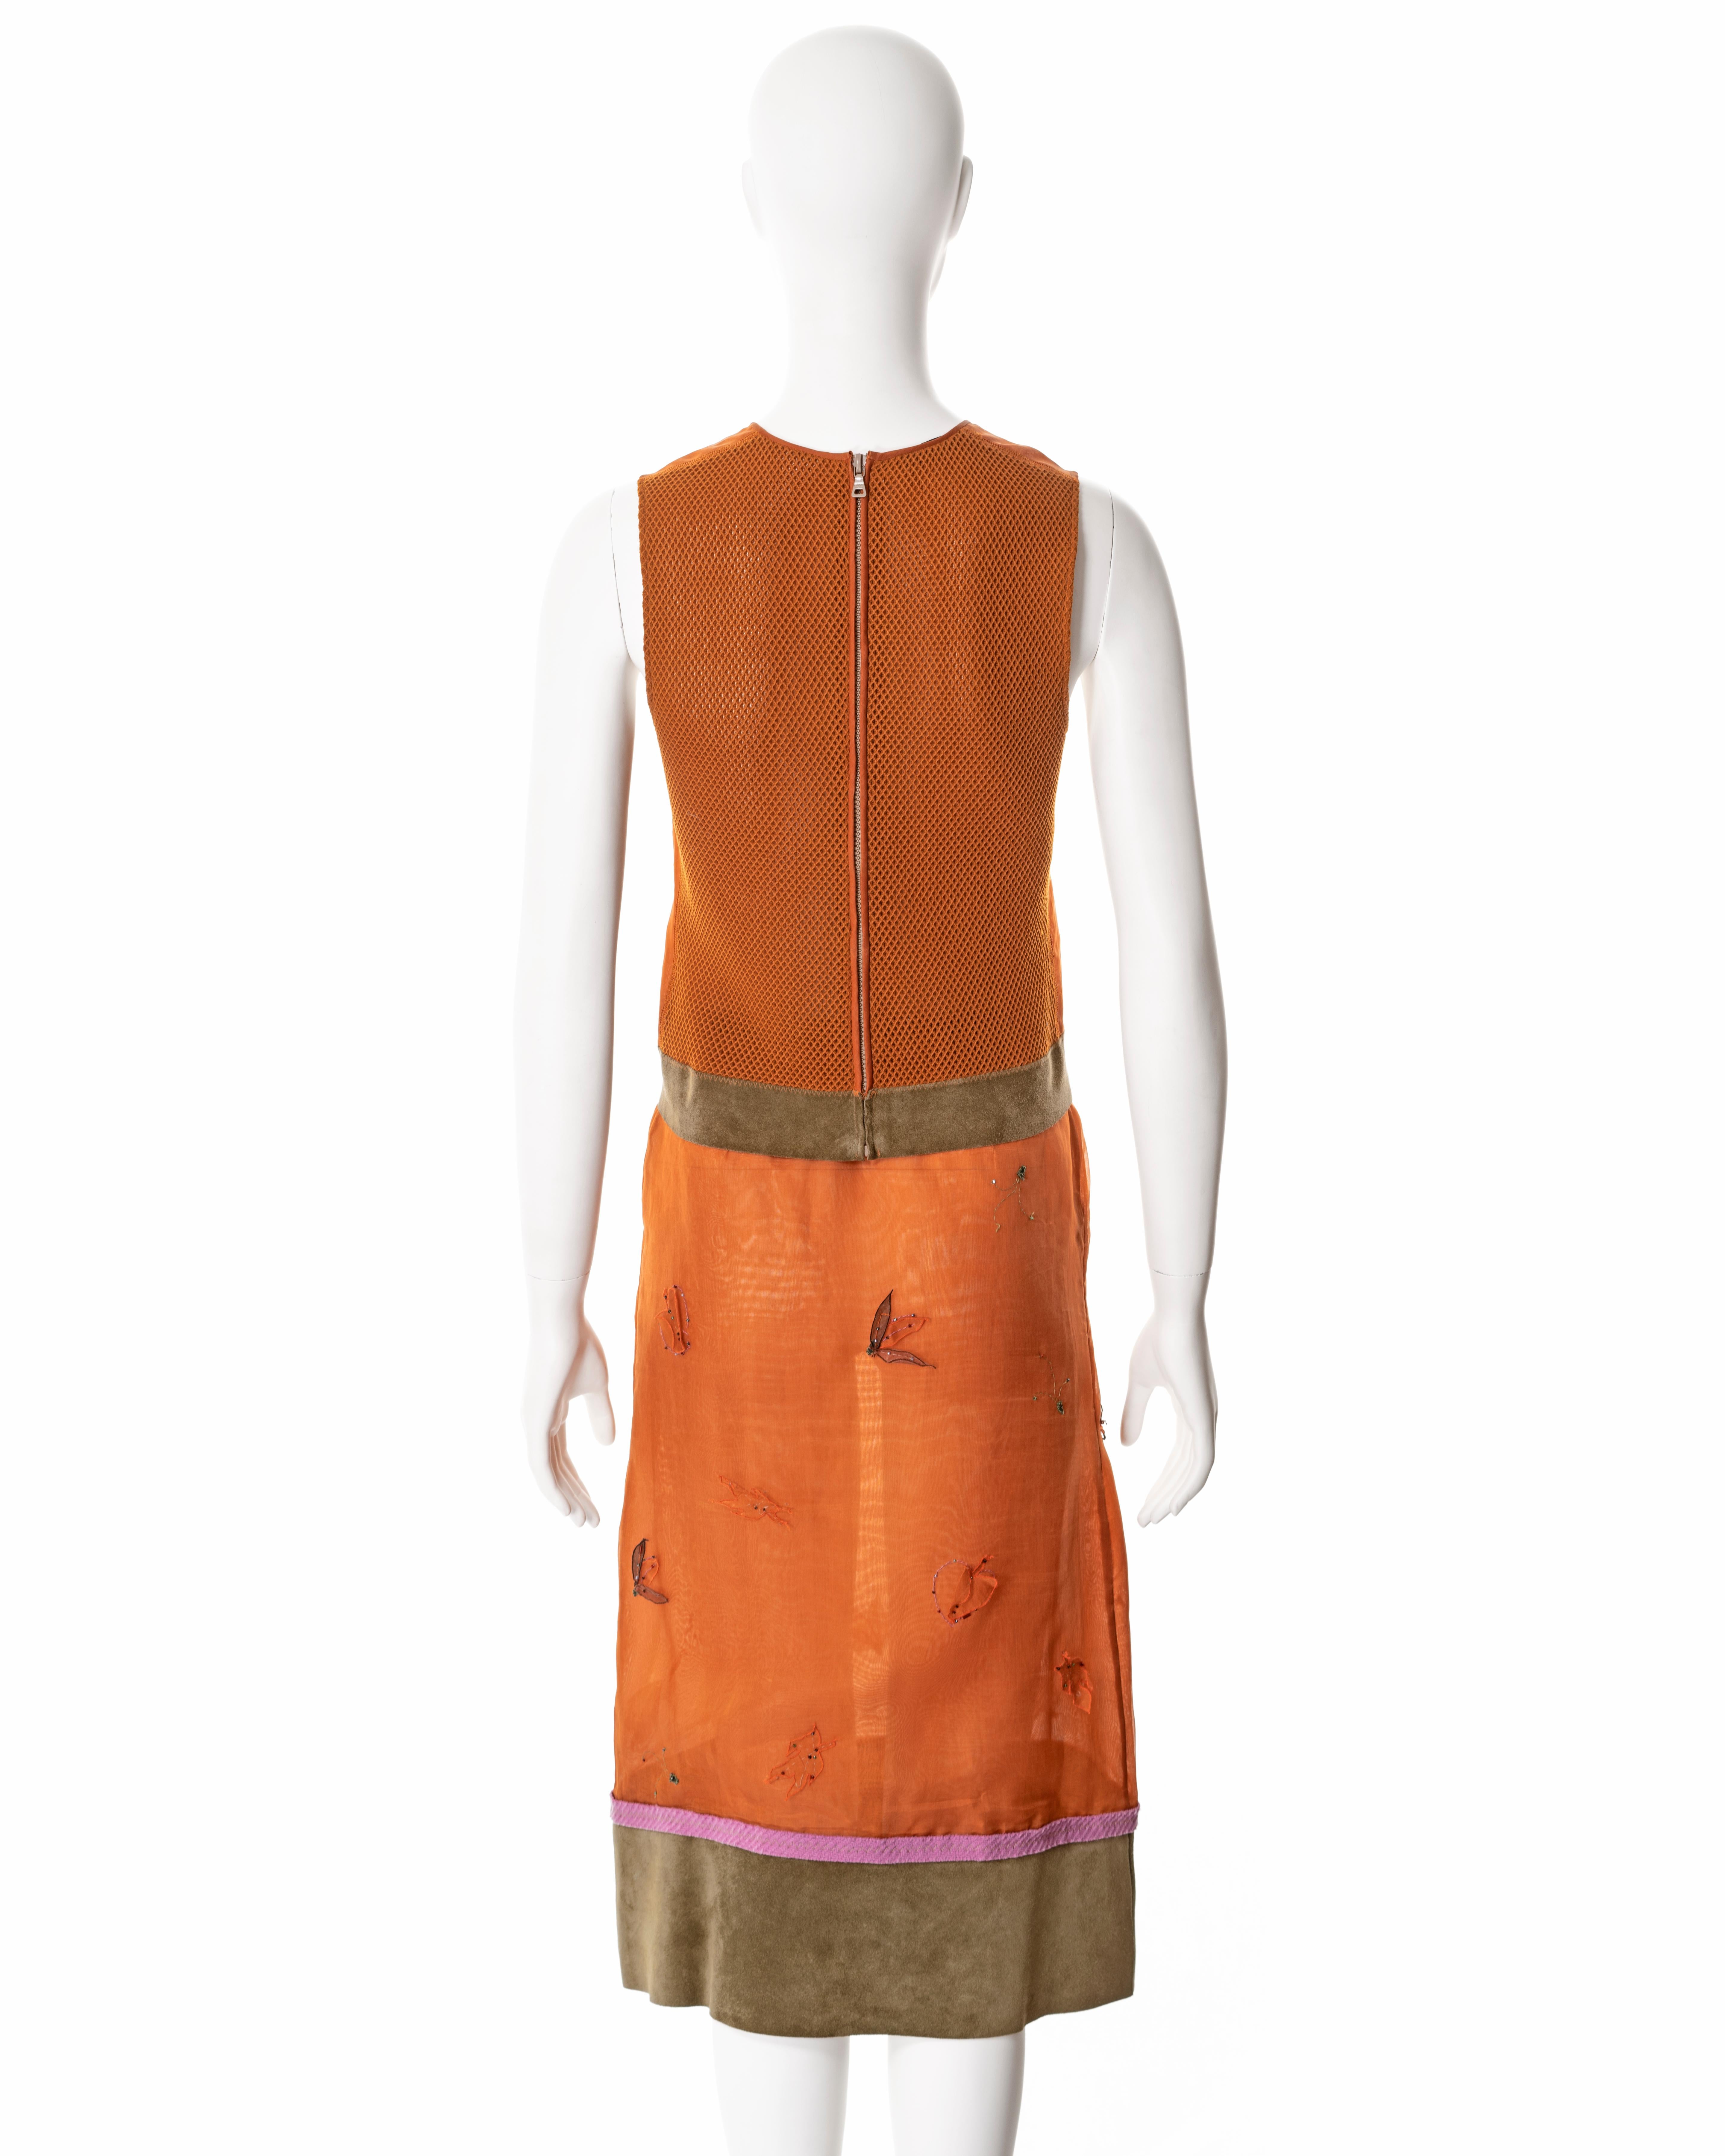 Prada embellished orange silk organza top and skirt set, fw 1999 For Sale 7